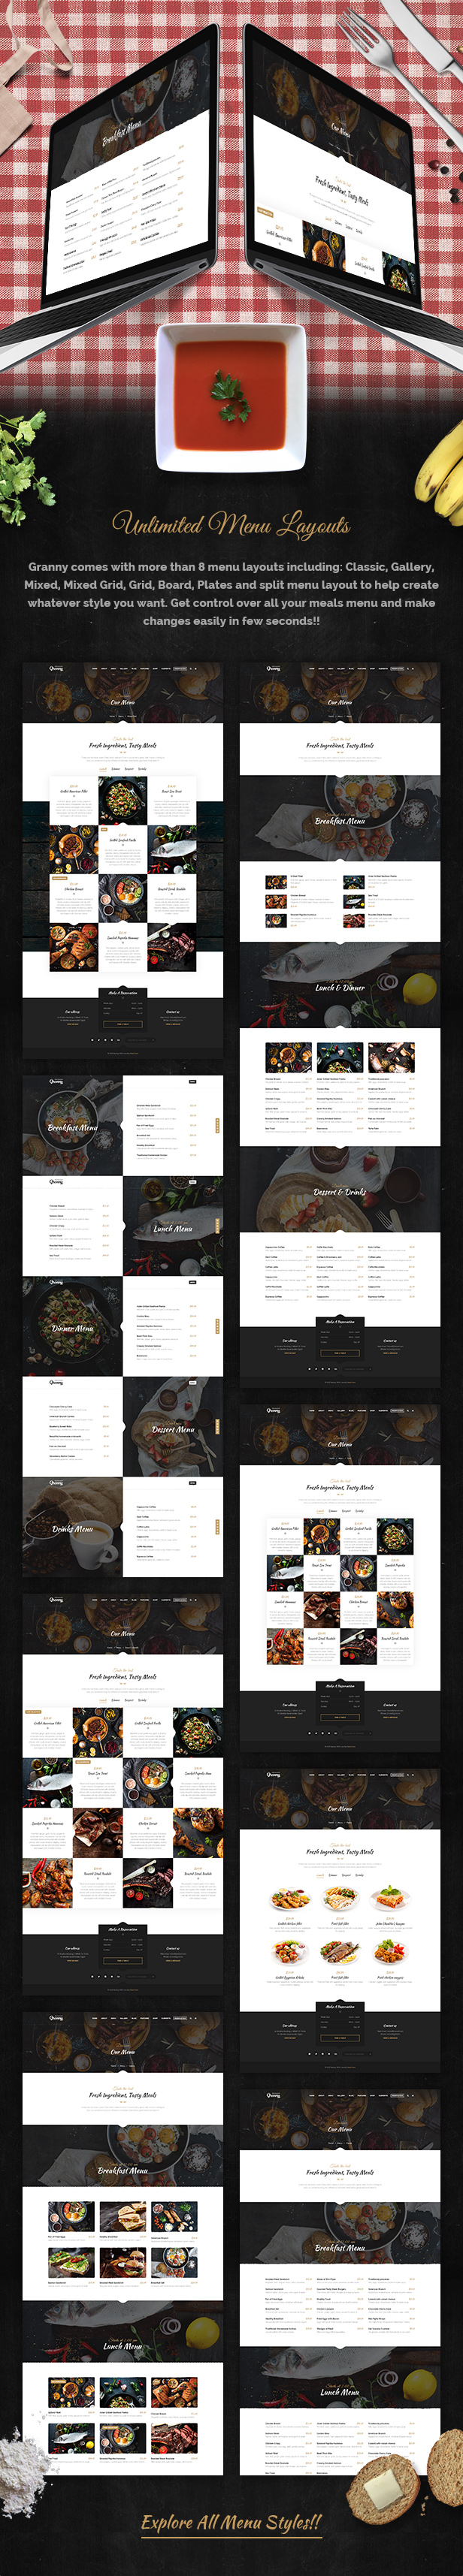 Granny - Elegant Restaurant & Cafe WordPress Theme - 6